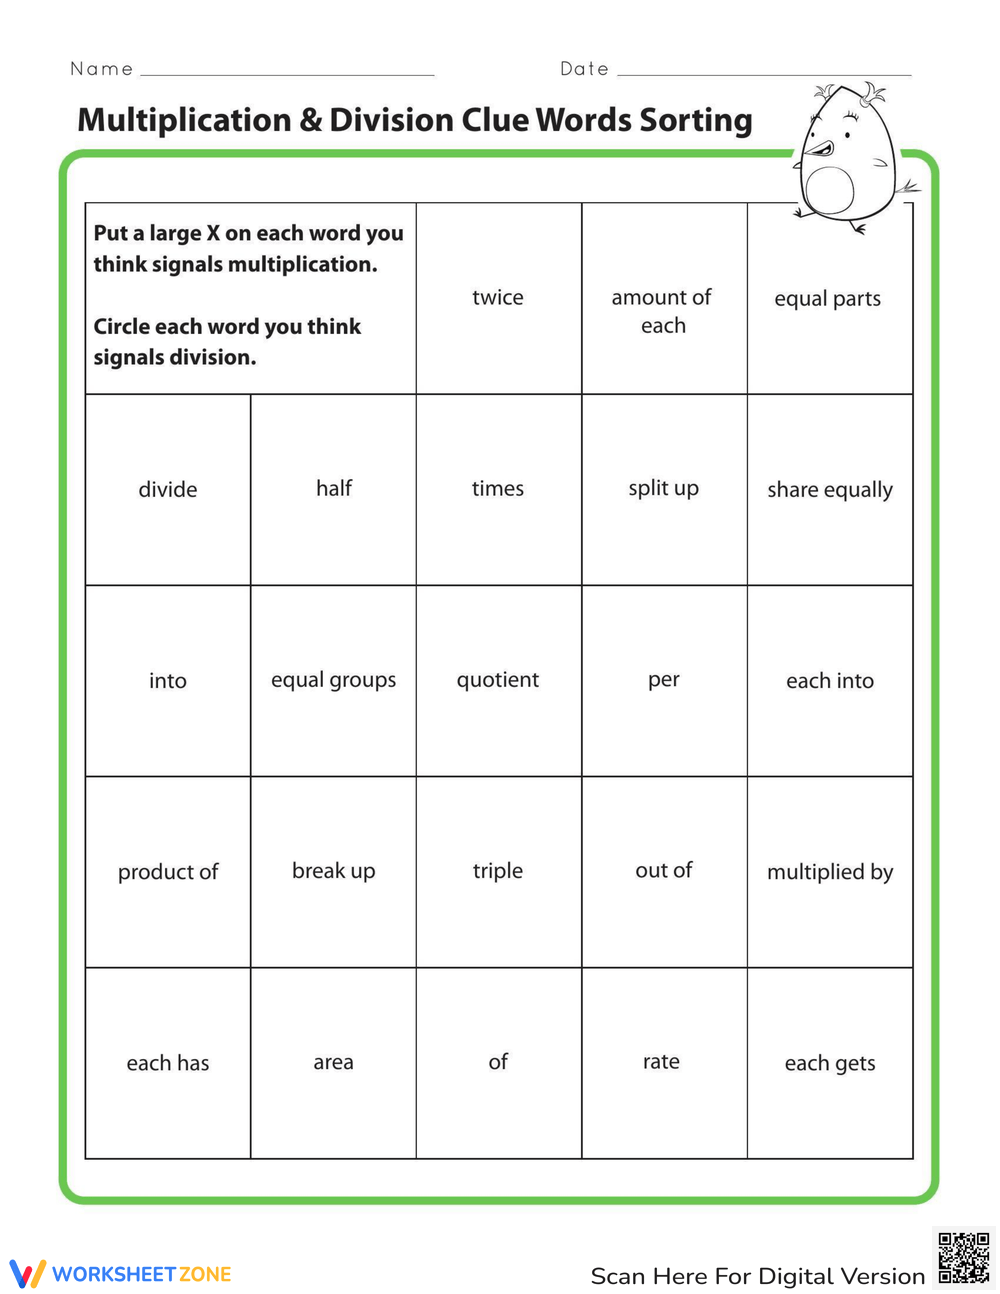 Multiplication Division Clue Words Sorting Worksheet